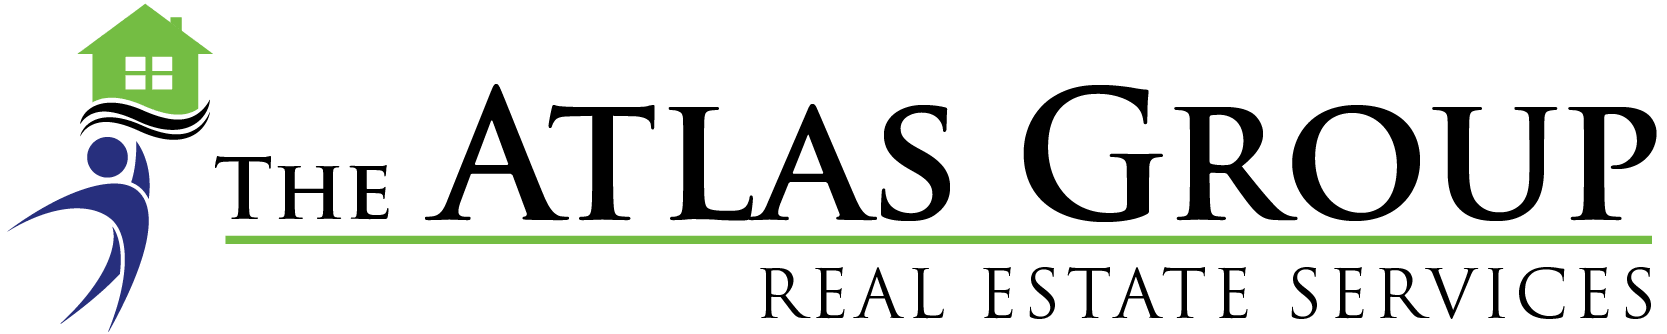 The Atlas Group Logo Banner